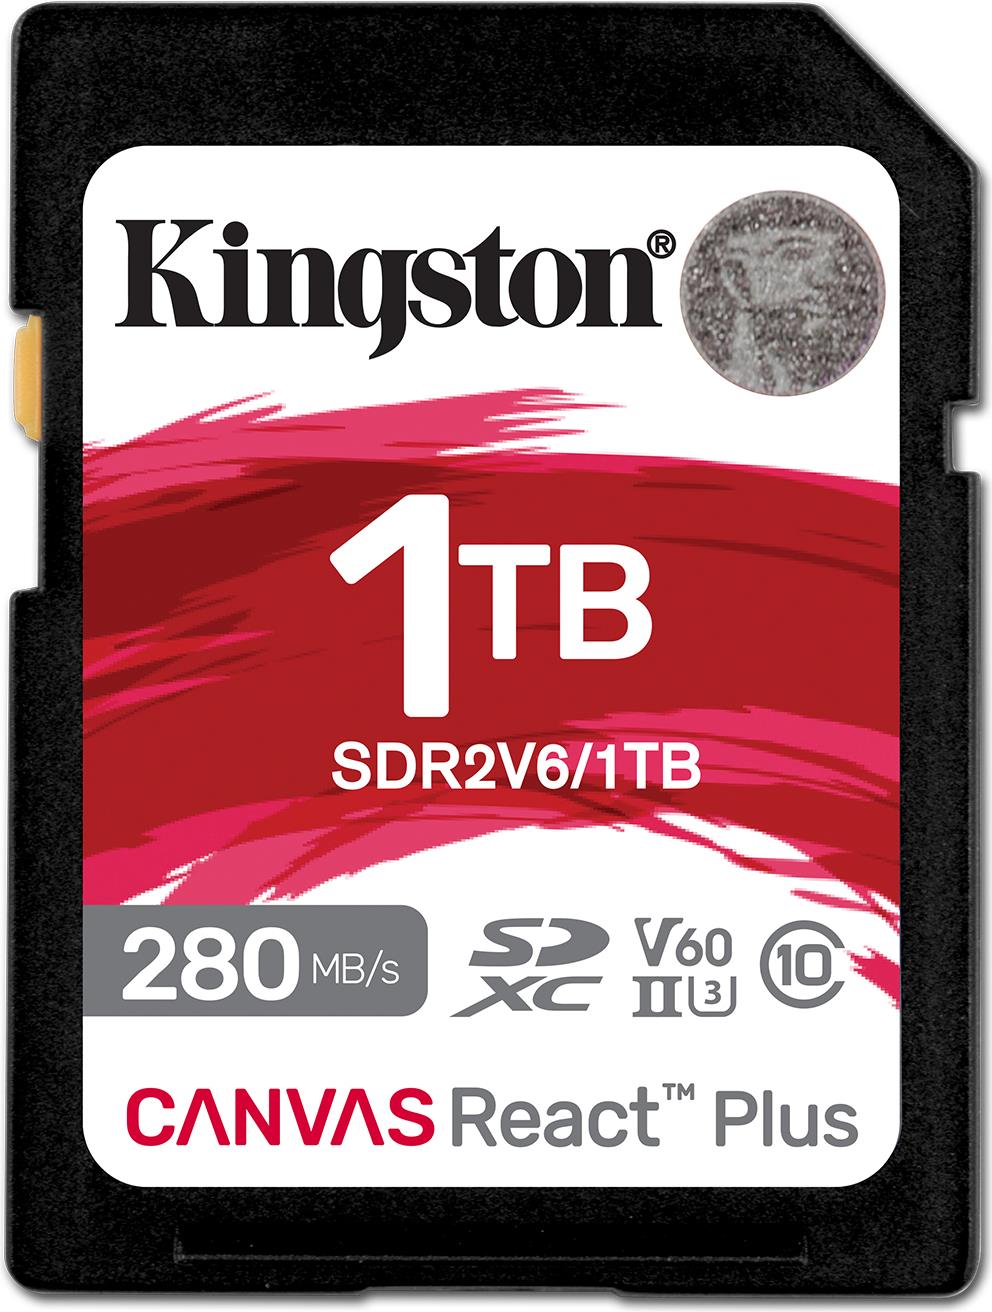 Kingston Technology 1TB Canvas React Plus SDXC UHS-II 280R/150W U3 V60 for Full HD/4K (SDR2V6/1TB)